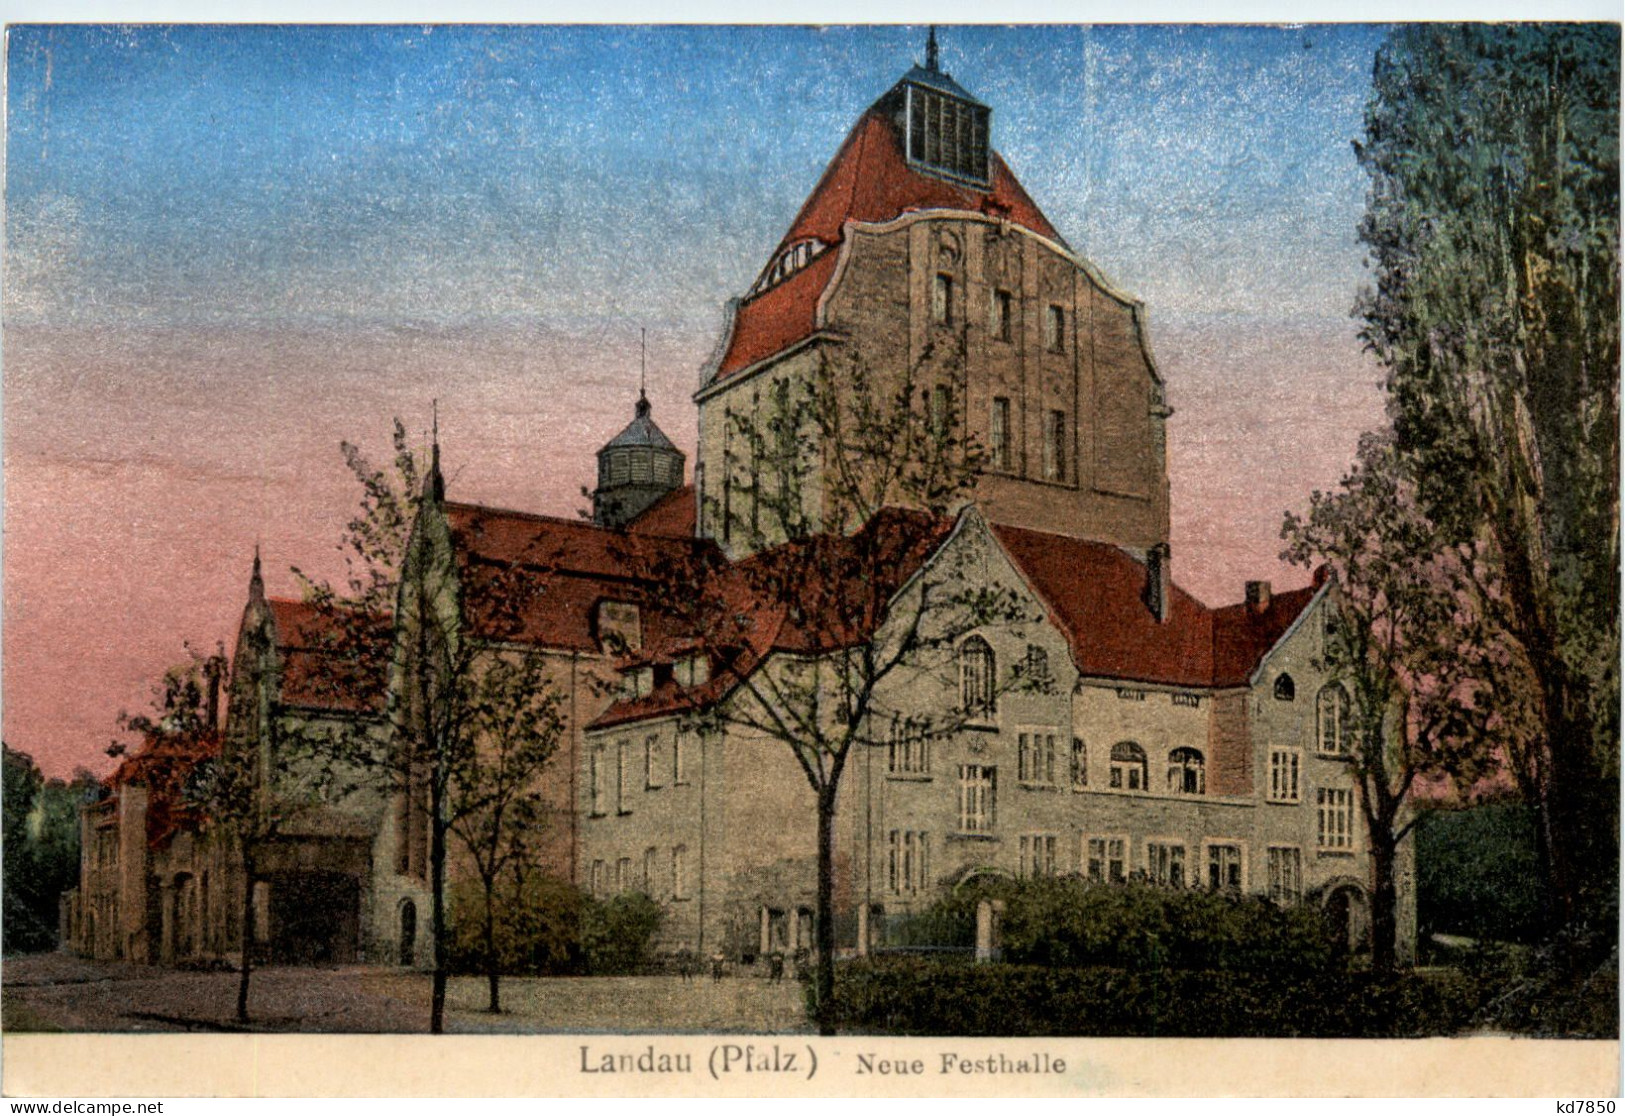 Landau Pfalz, Neue Festhalle - Landau